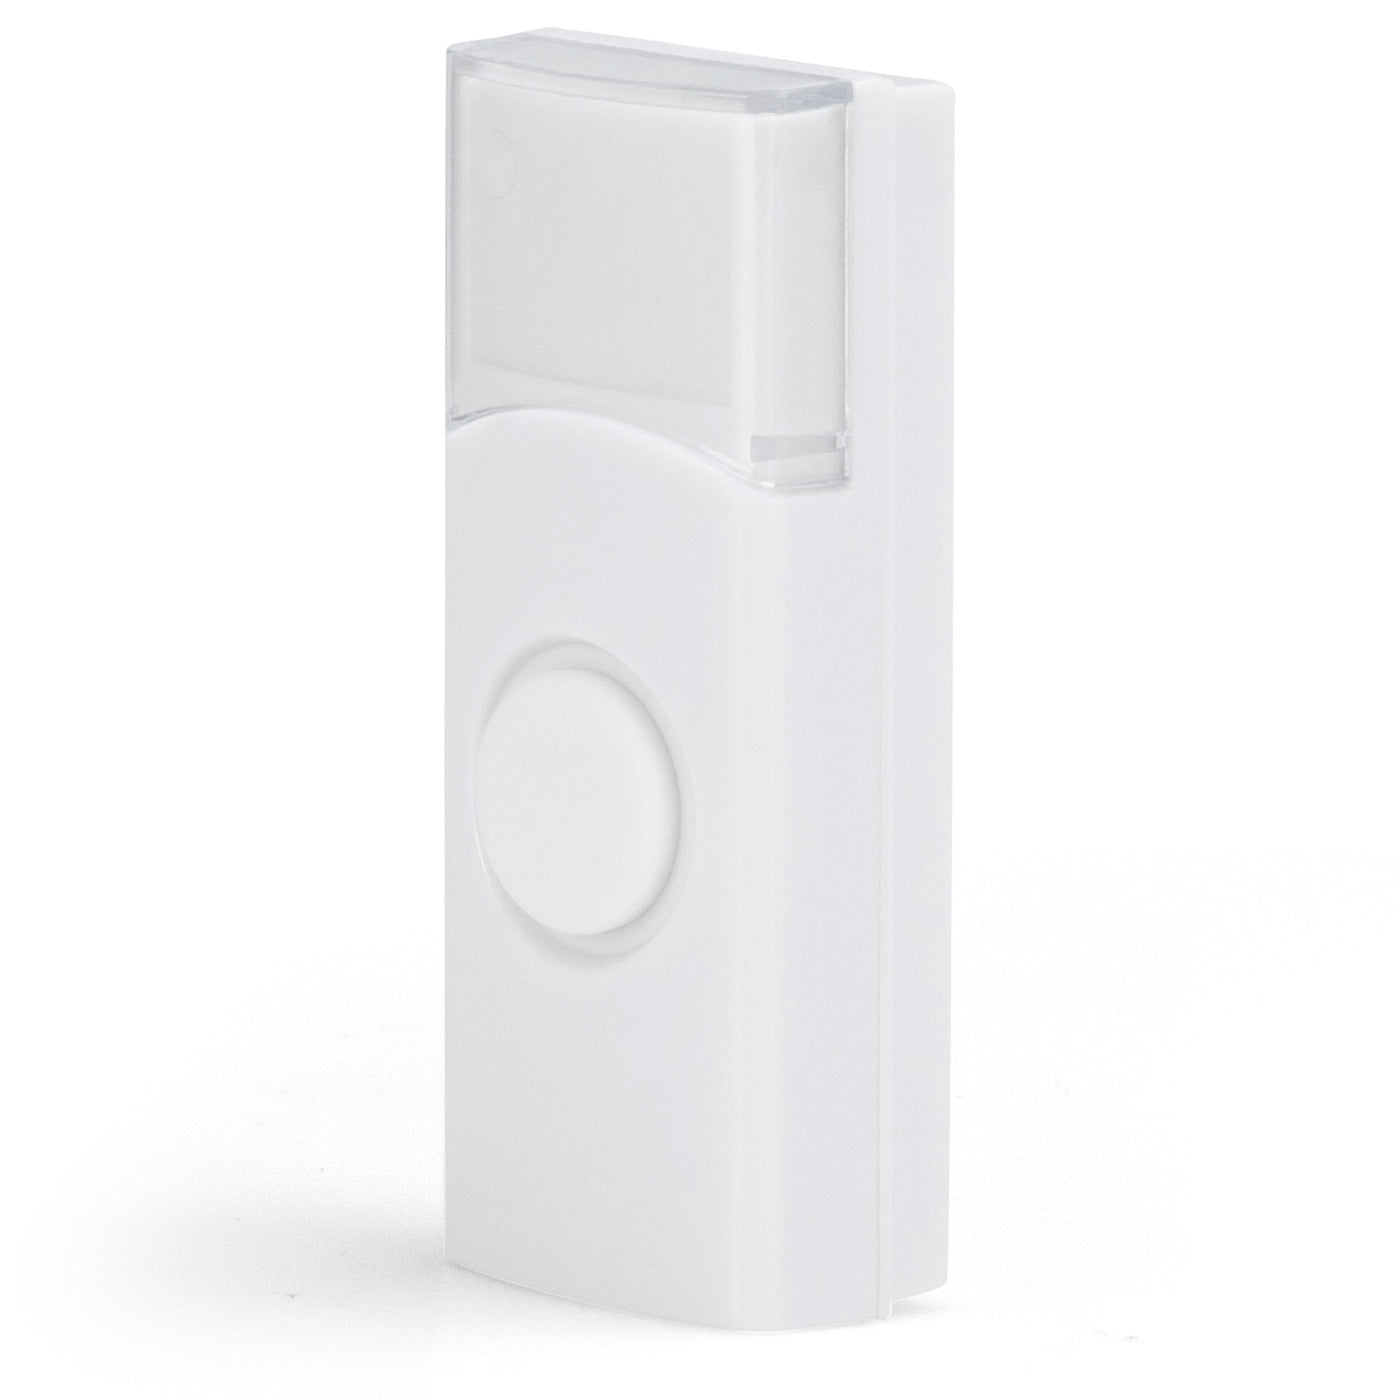 Alecto ADB-11WT - Draadloze deurbel, wit